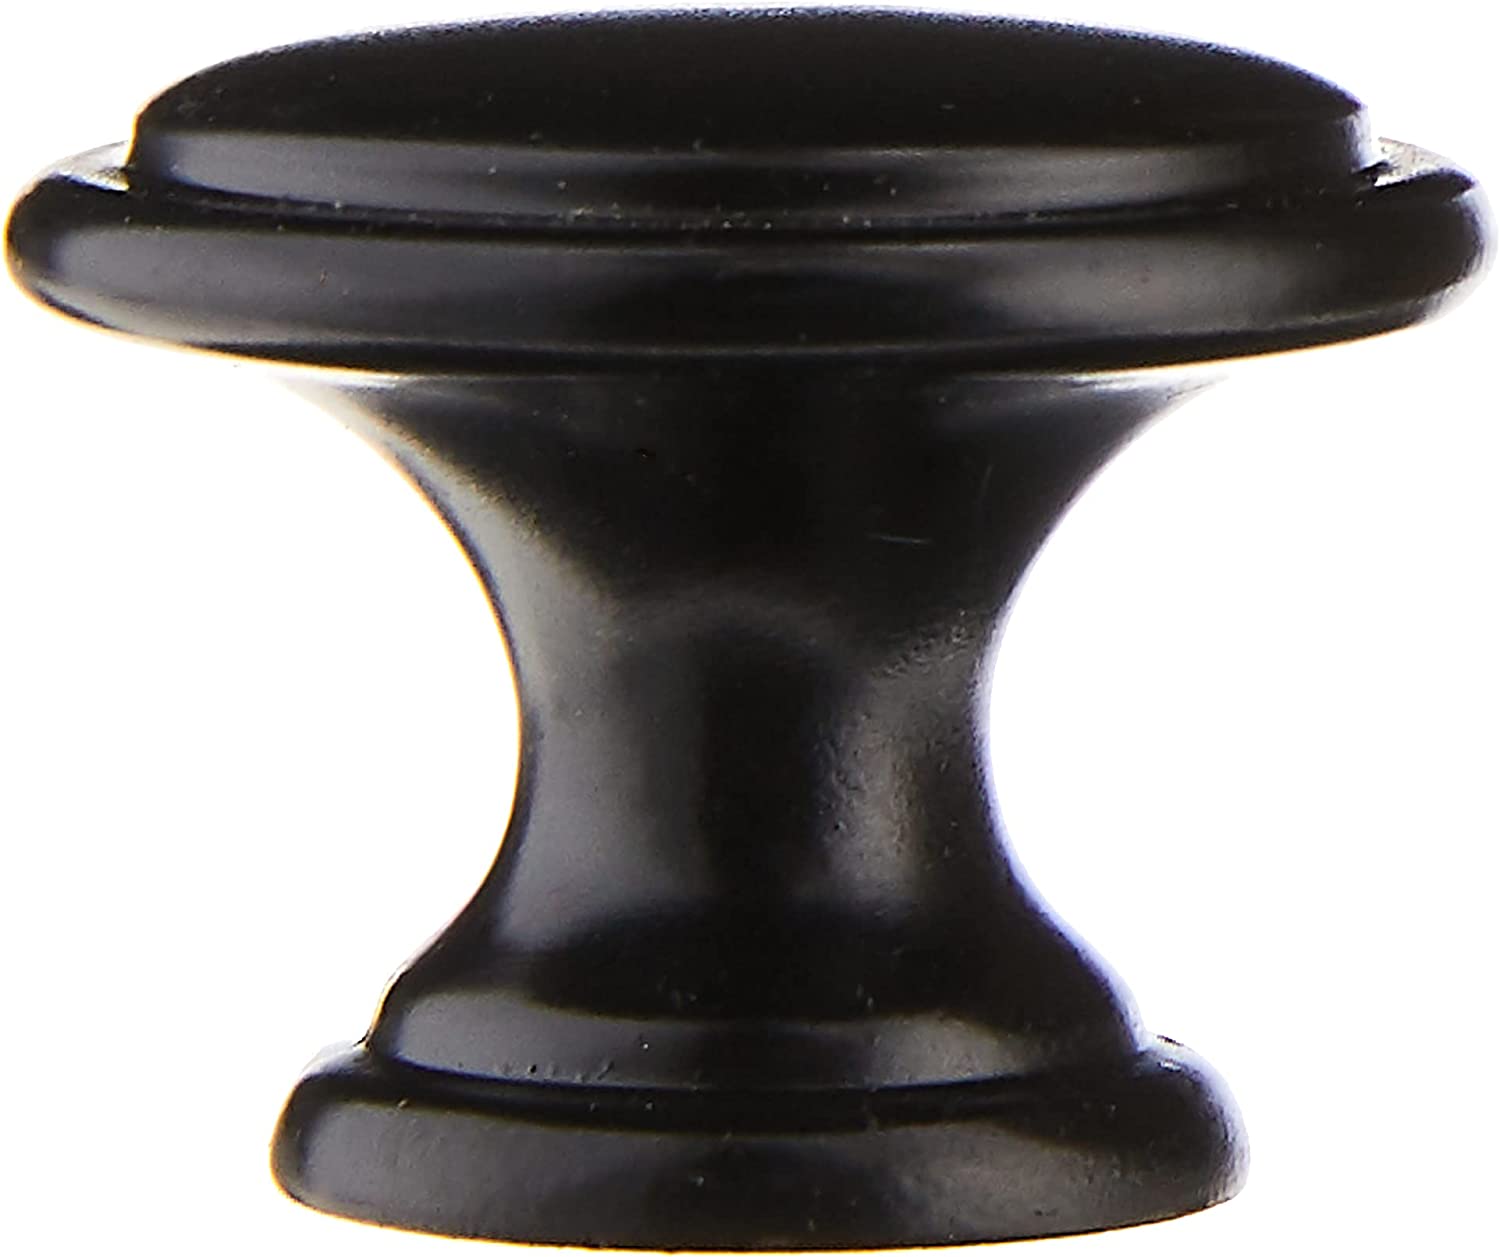 AmazonBasics Button Mushroom Cabinet Knob 1.25in Diameter Flat Black 25Pack